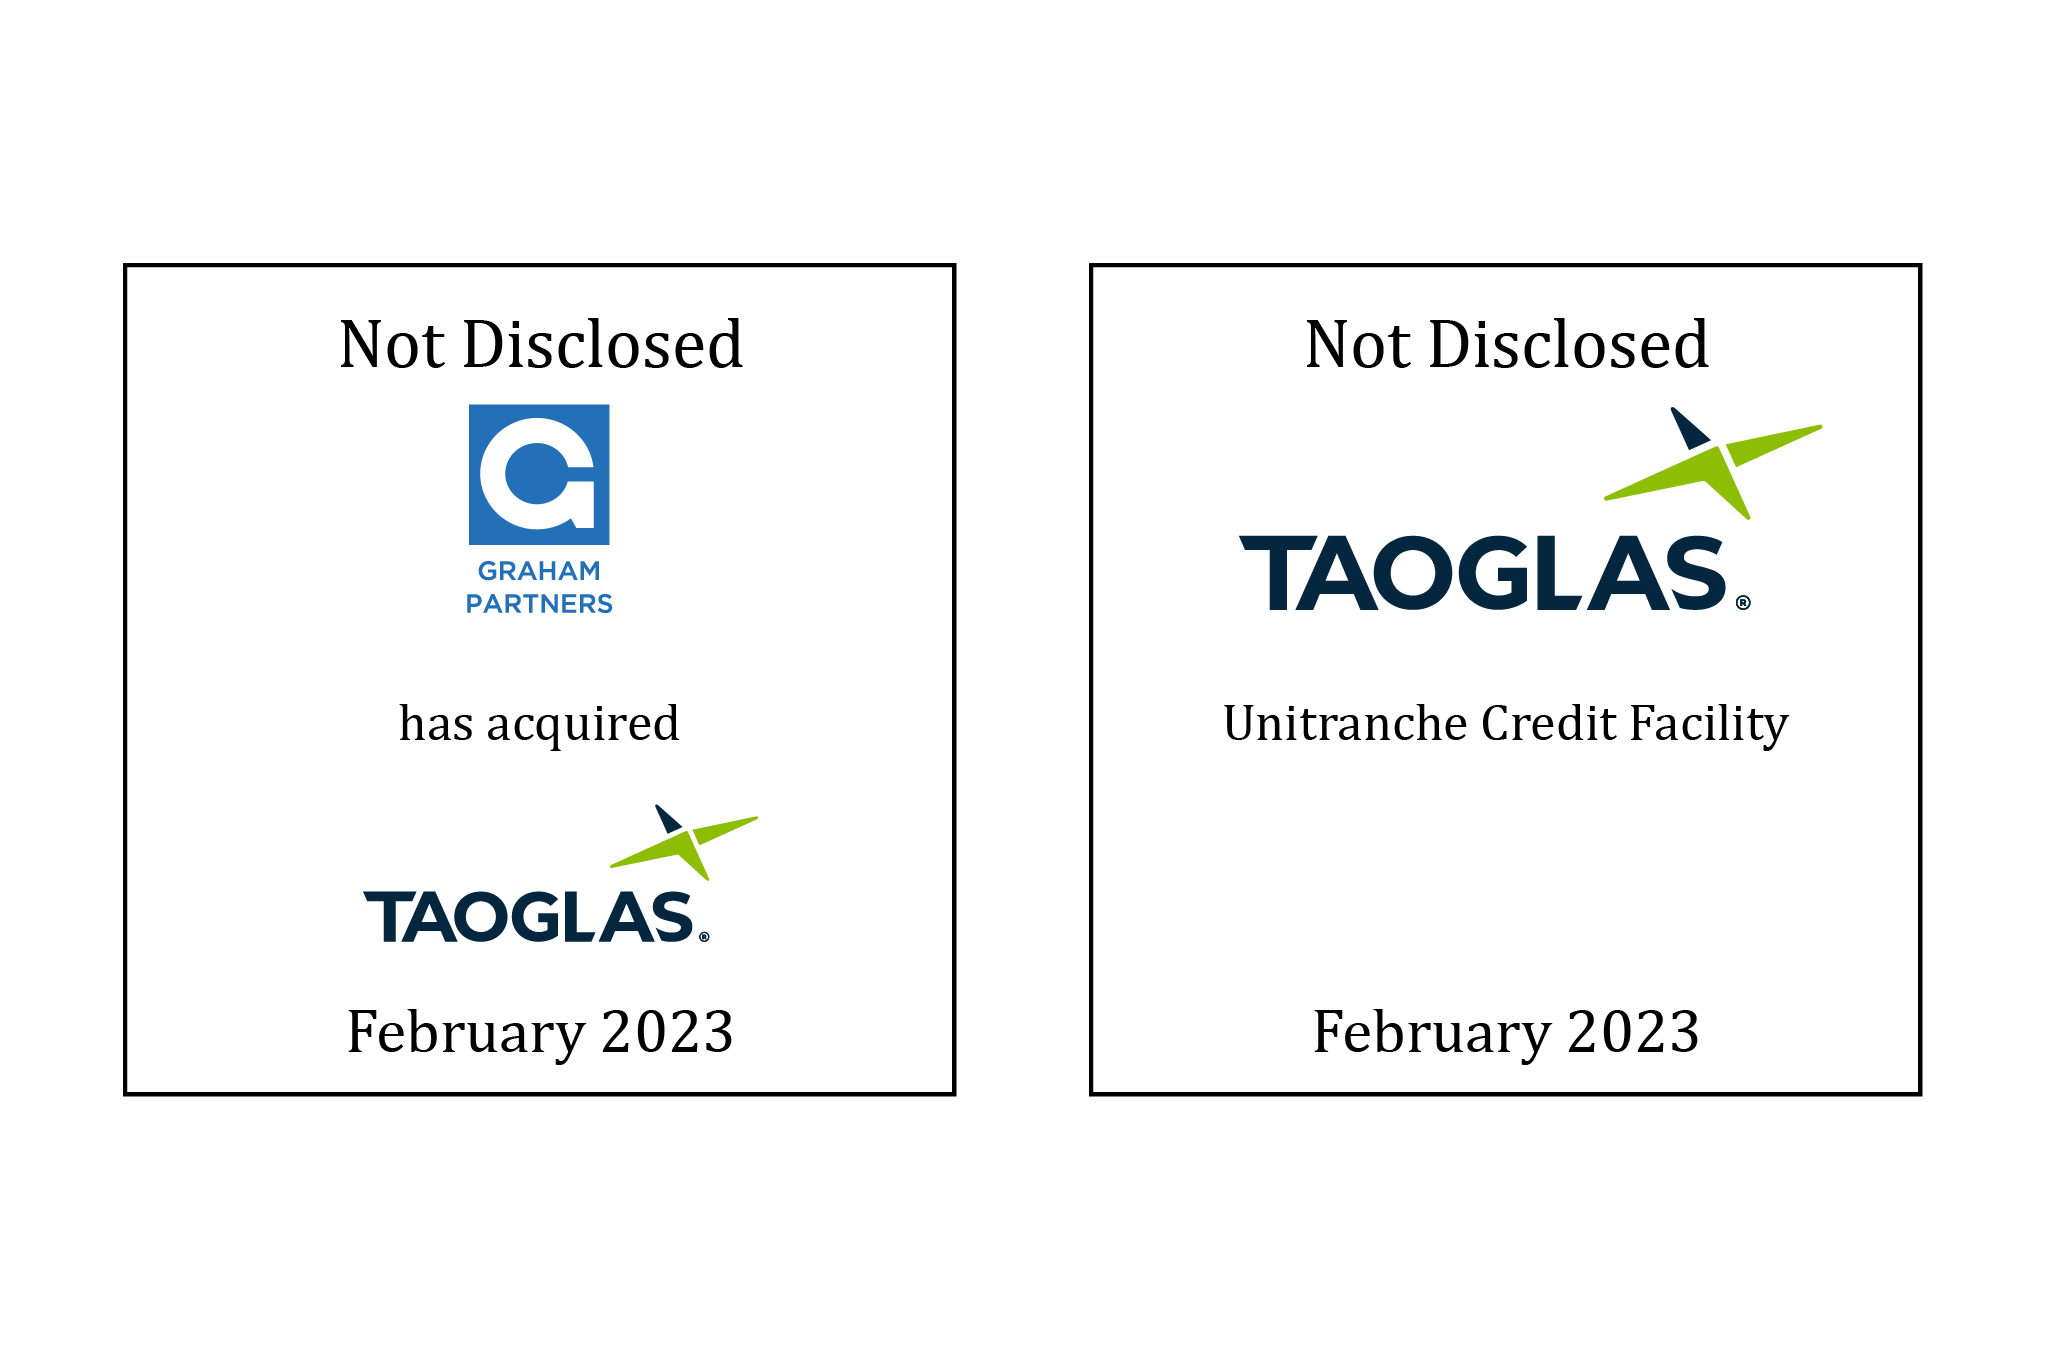 Graham Partners has acquired Taoglas, February 2023 | Taoglas Unitranche Credit Facility